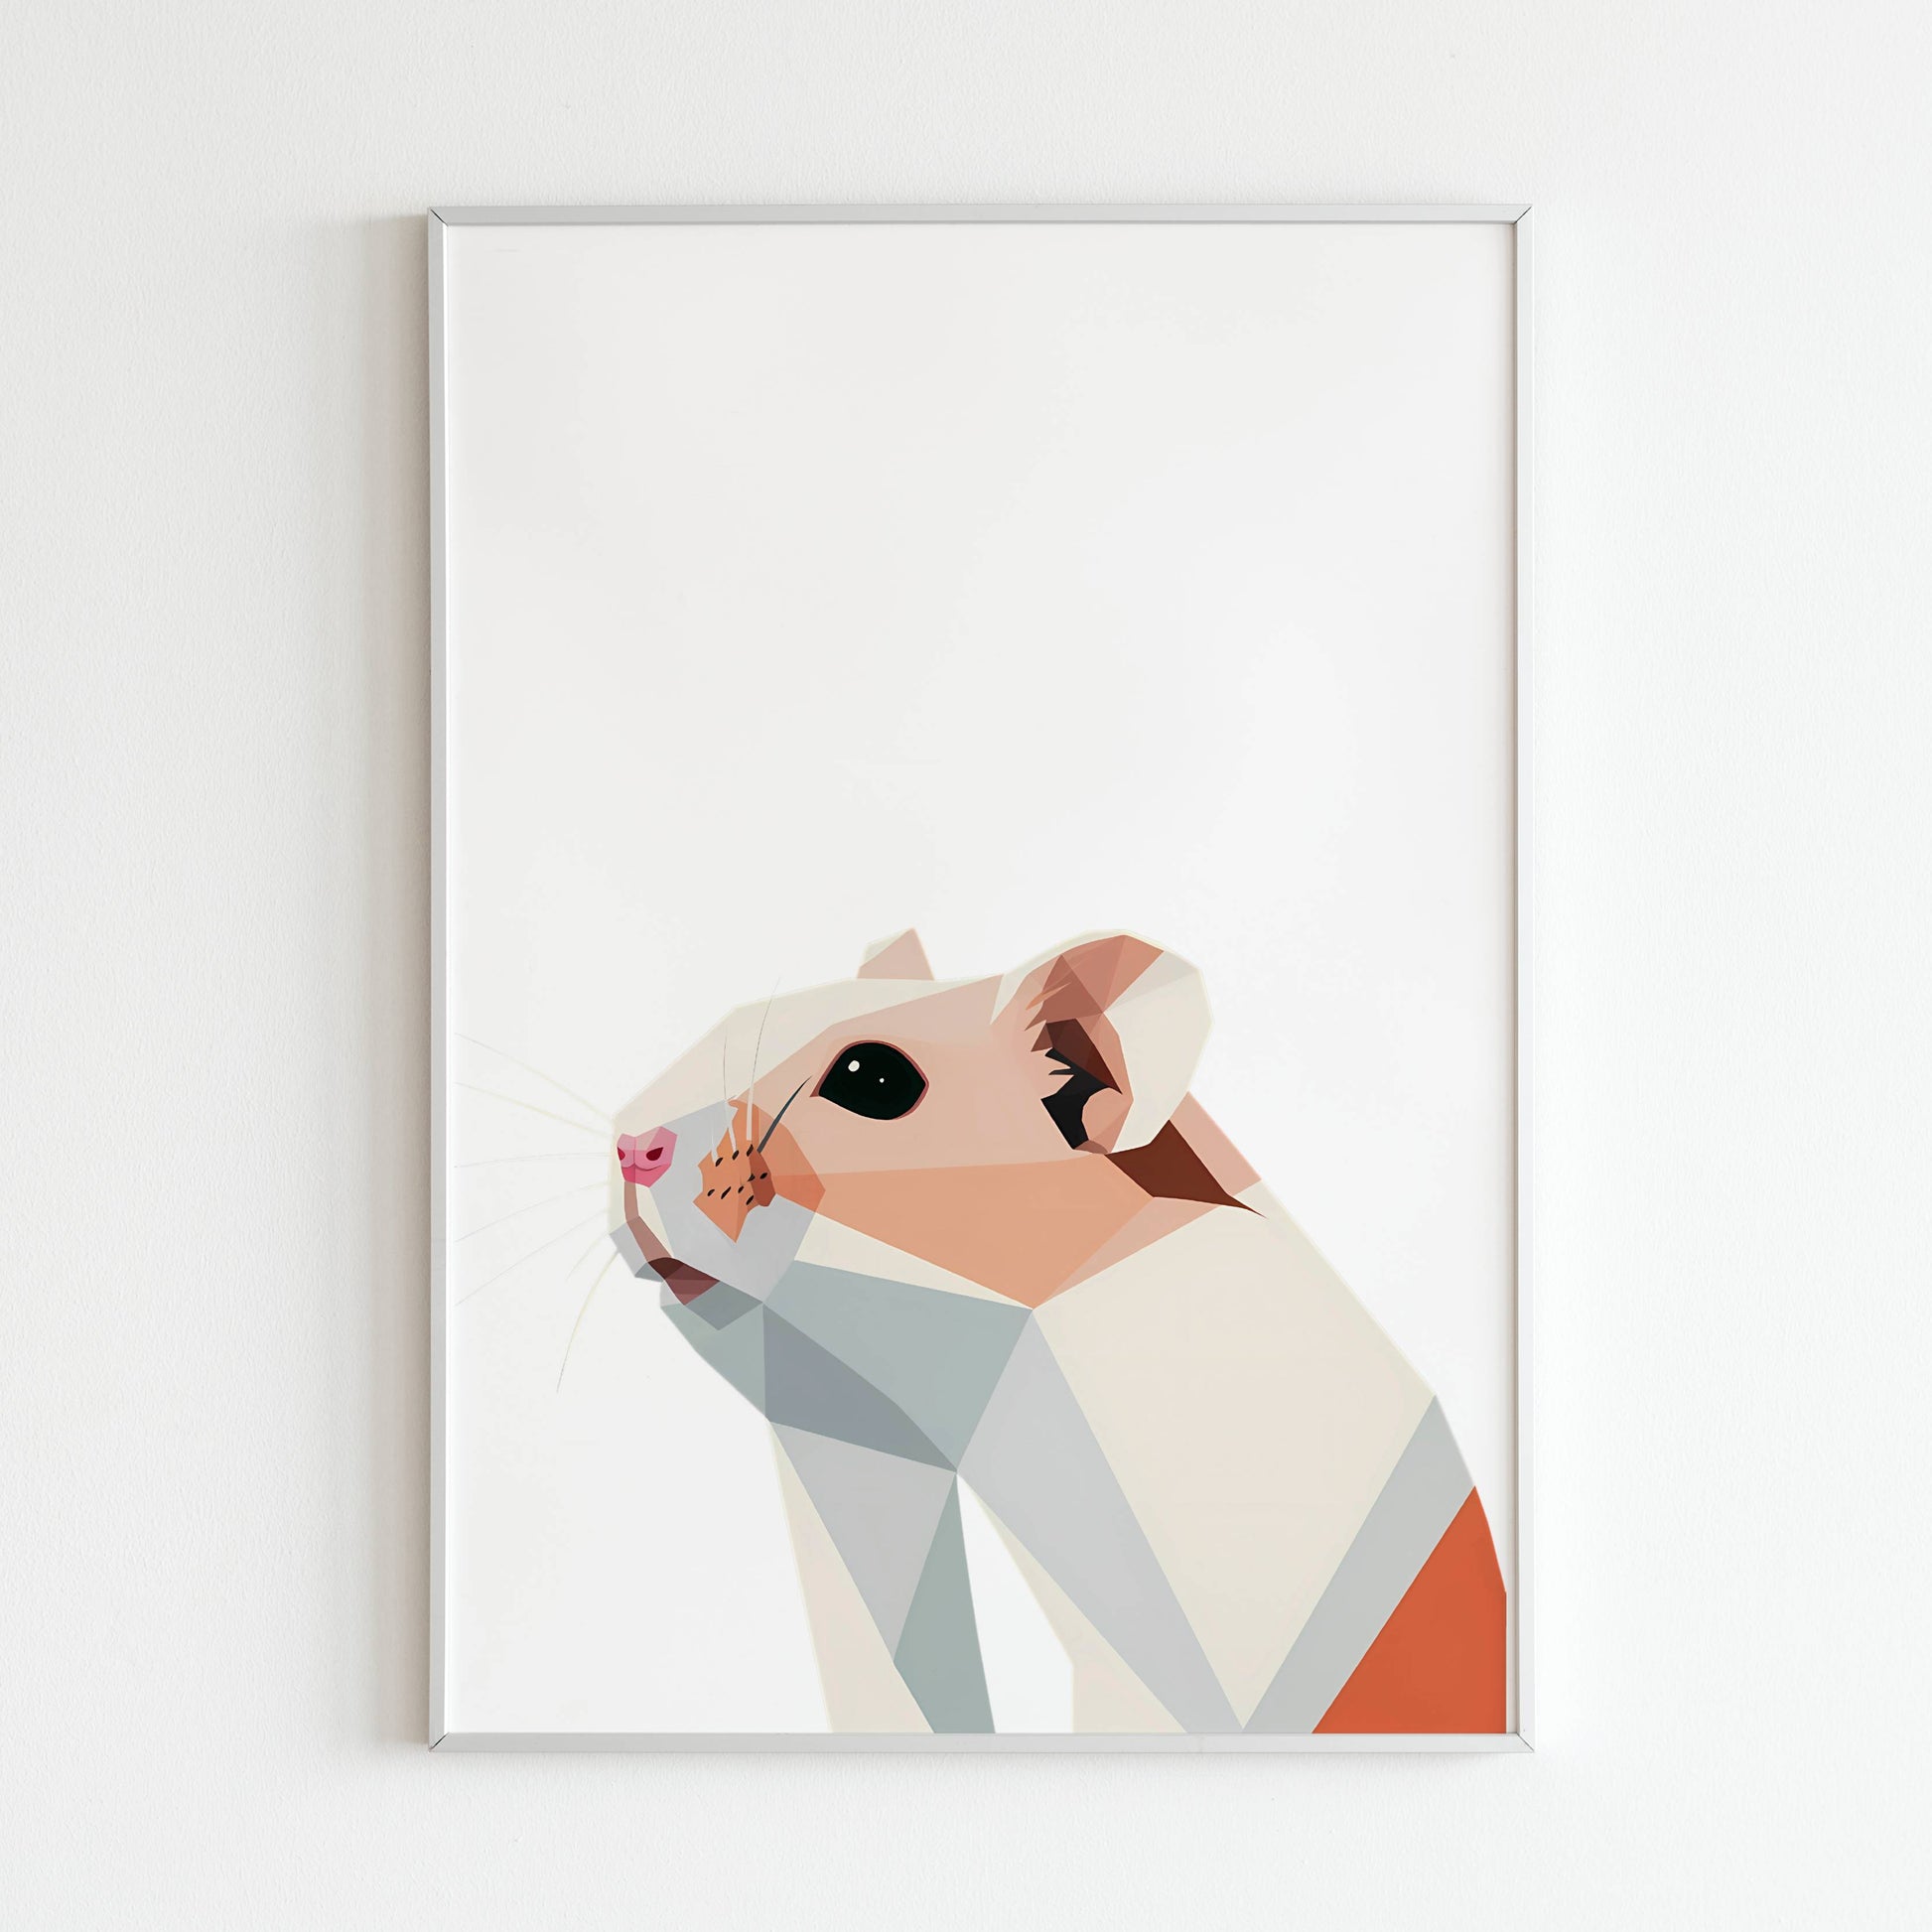 Downloadable minimalist art print of a hamster